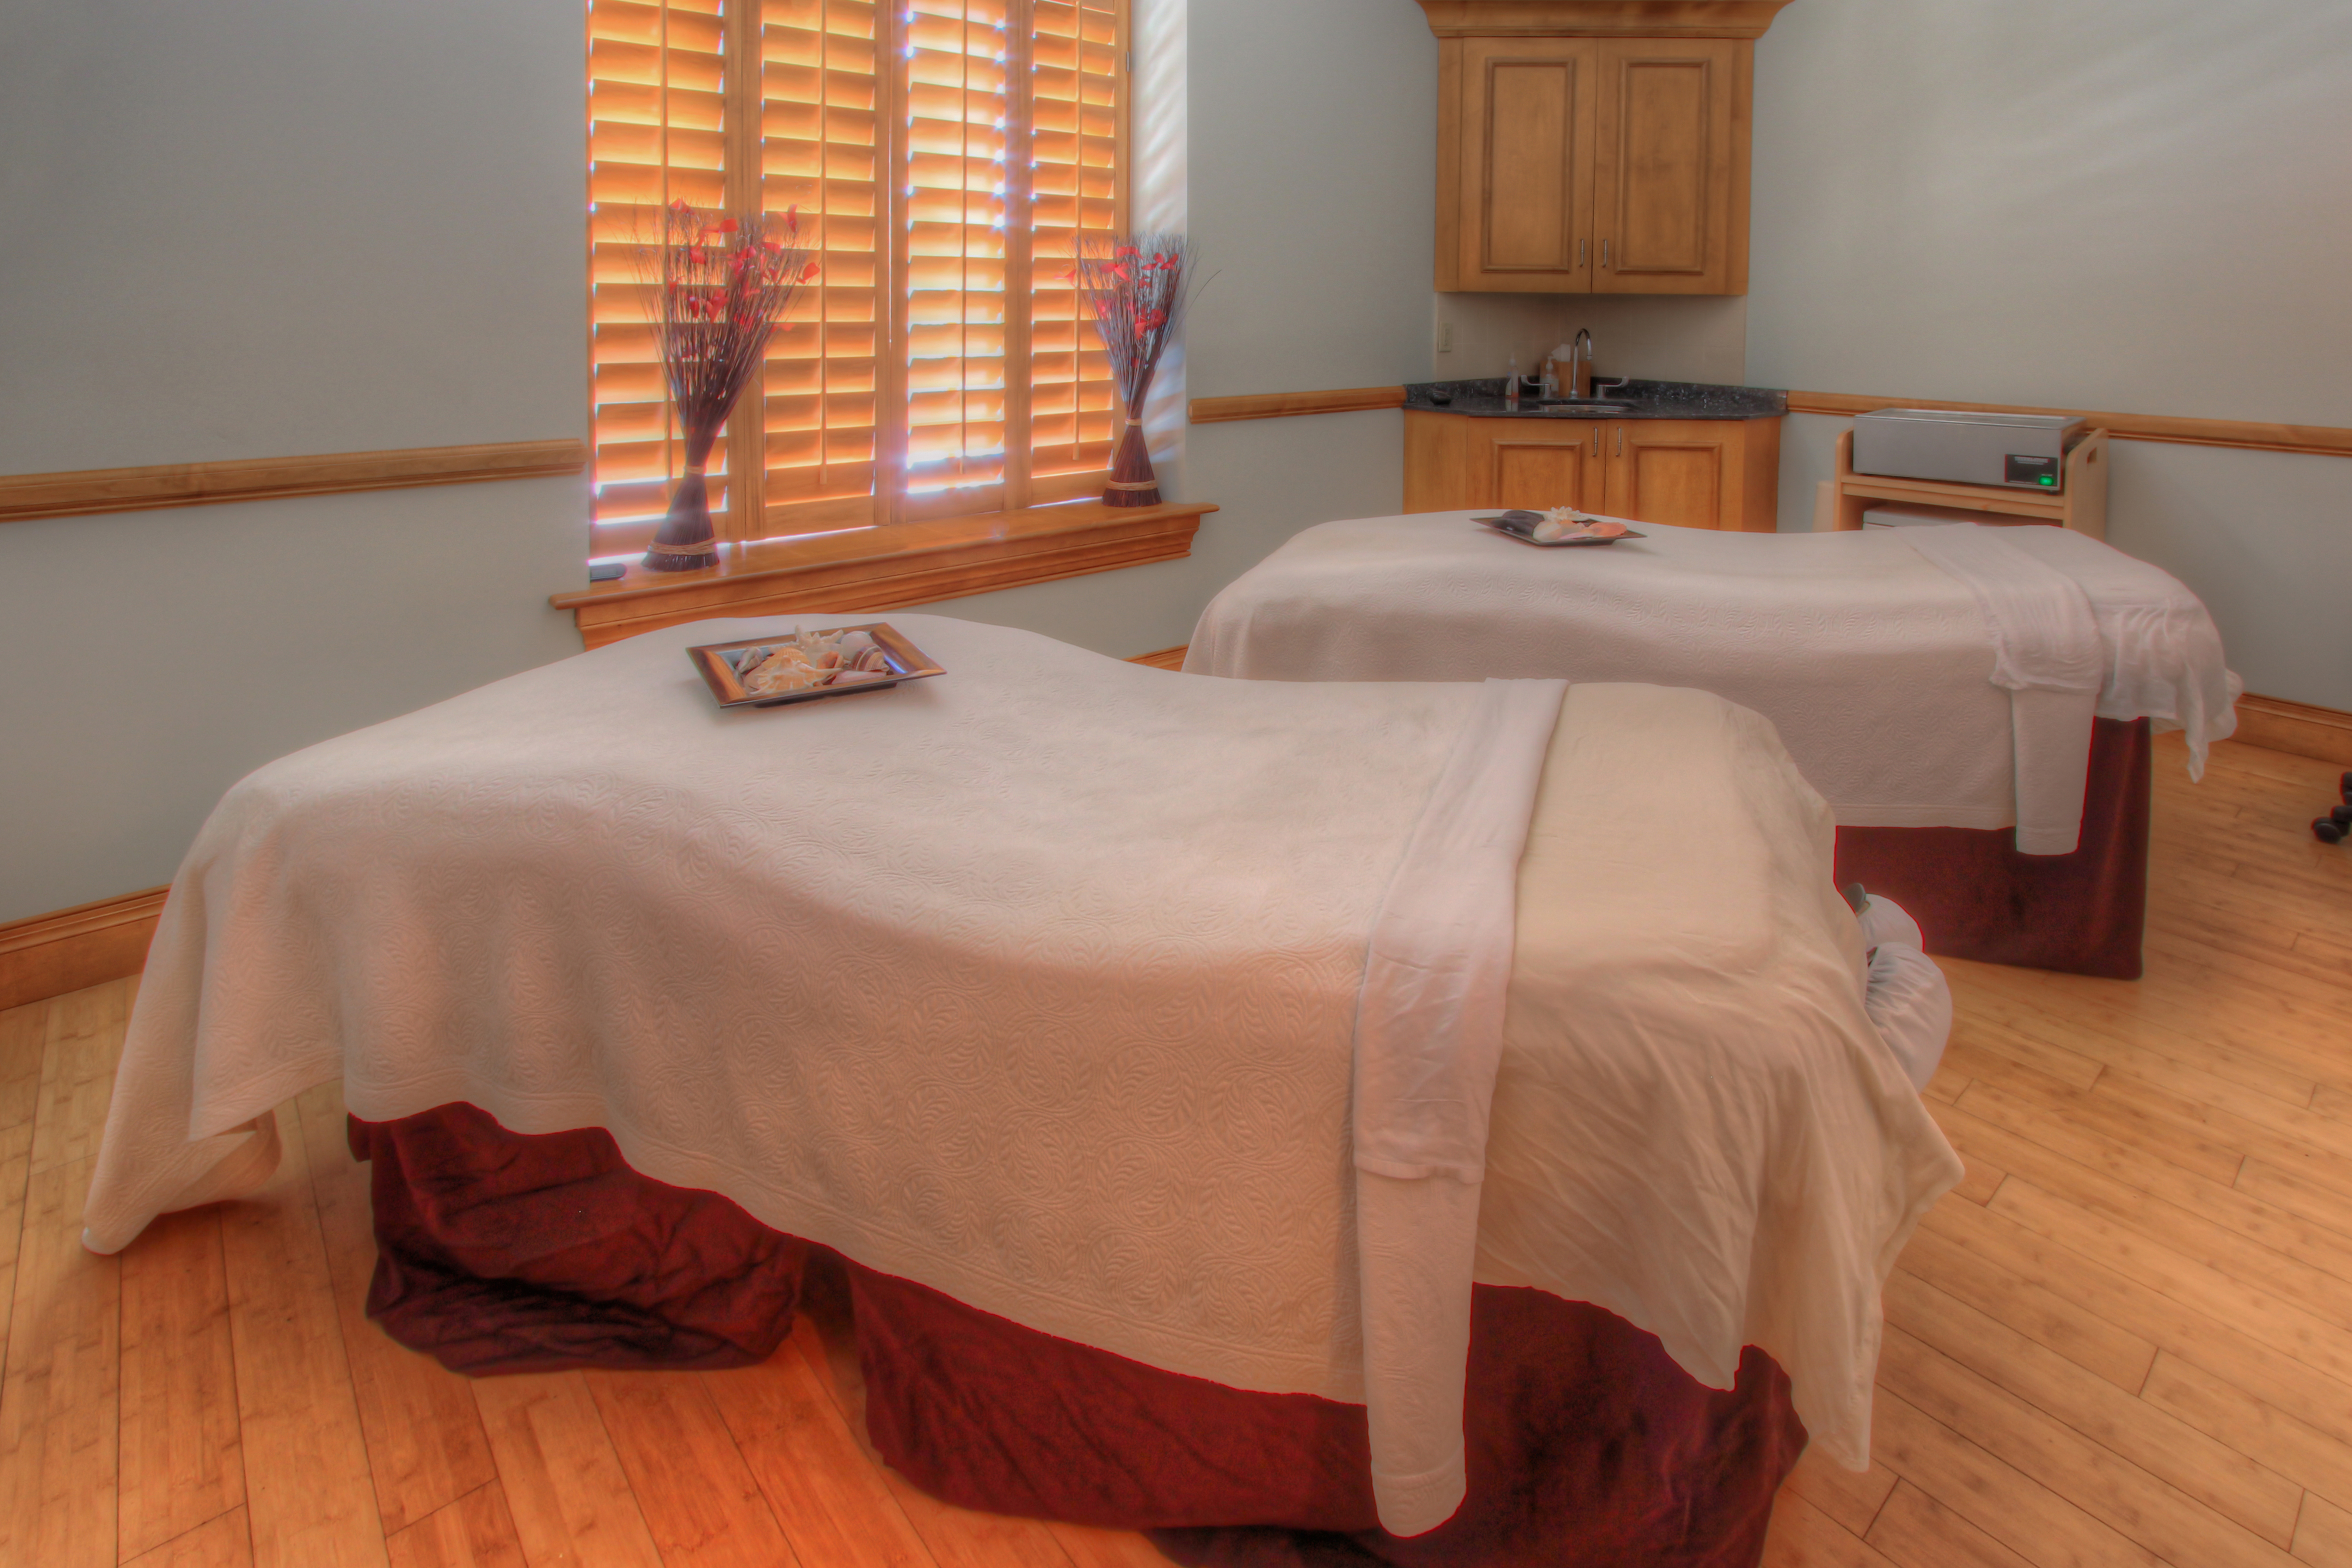 Hotel Spa Massage Treatment Room